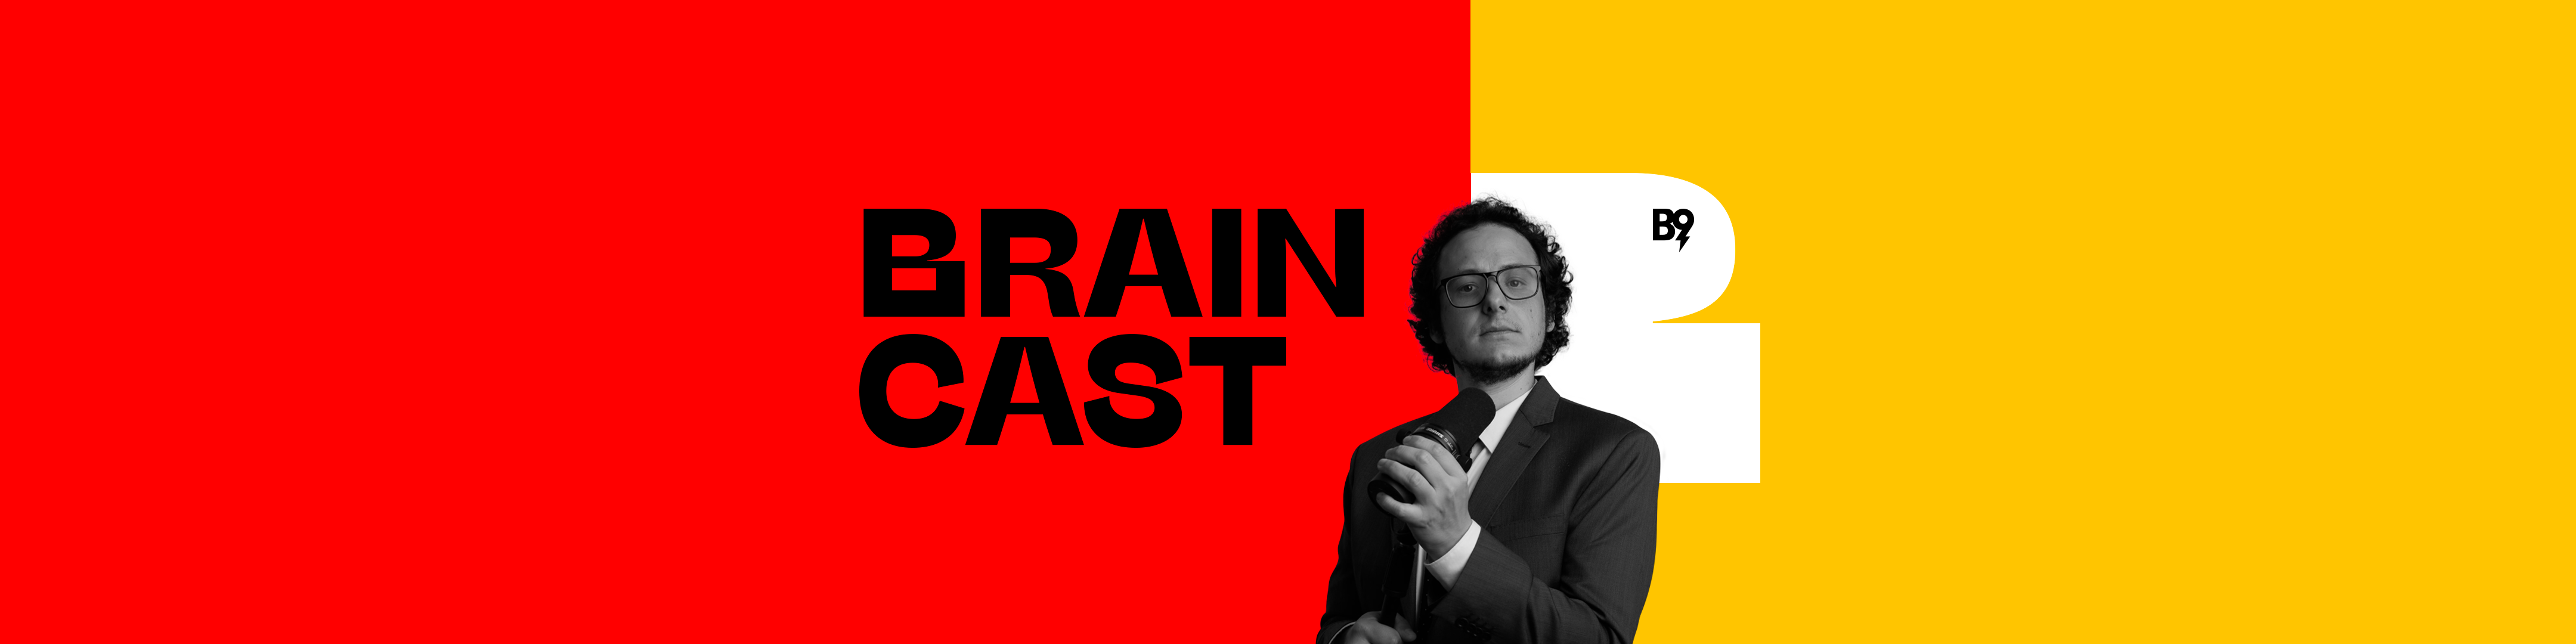 Braincast 486 - Topzera 2022 • B9